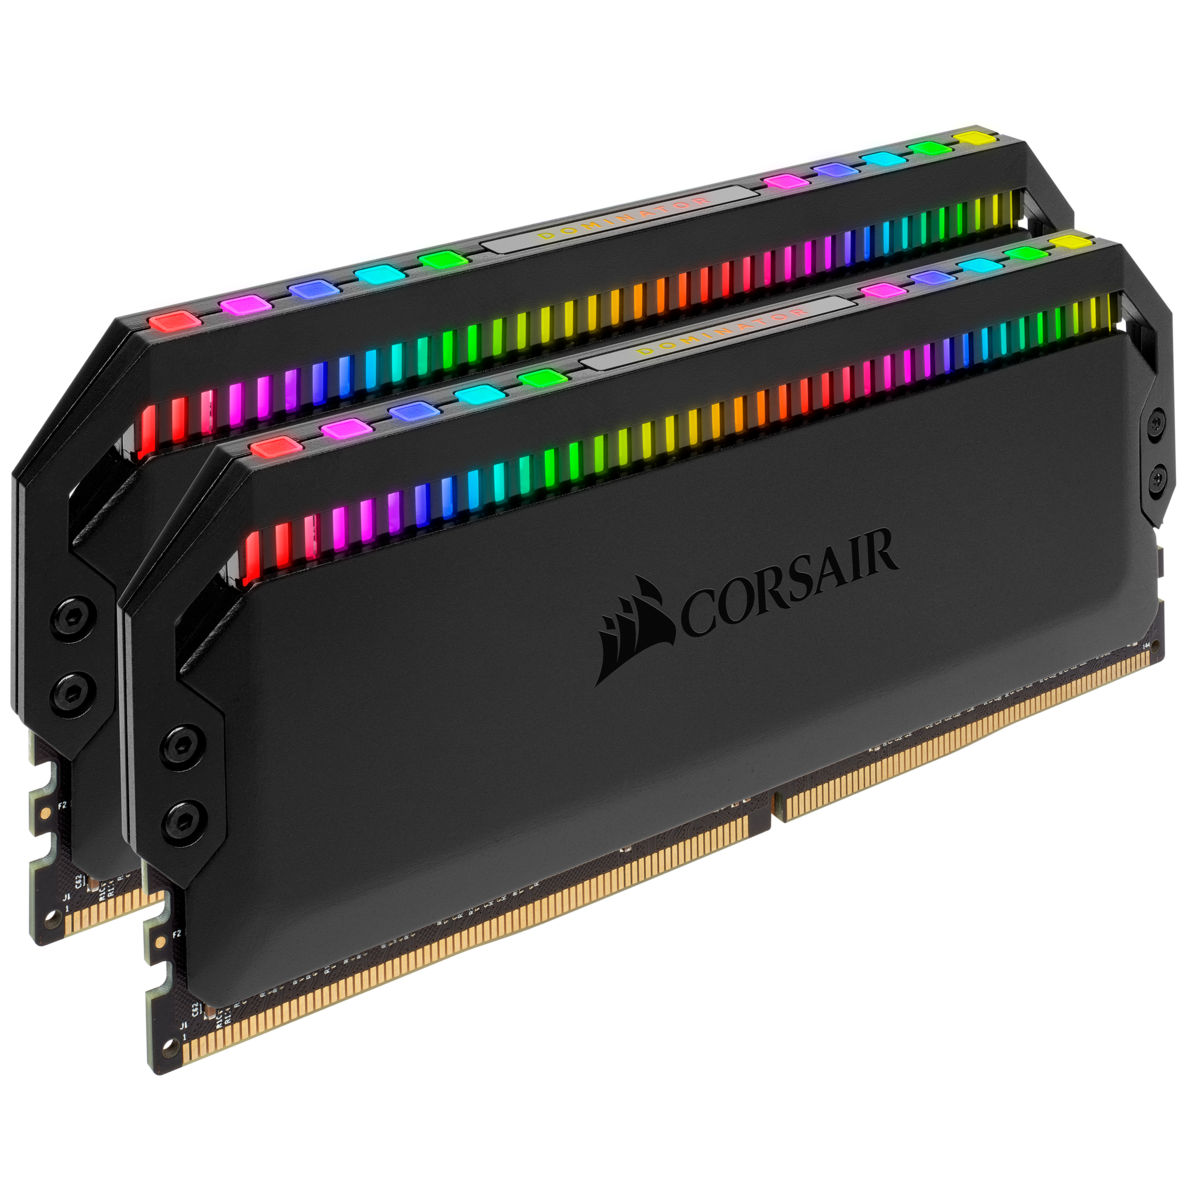 CORSAIR 2x8GB,1.35V, Dominator Platinum RGB GB 16 Hsp DDR4 Speicher-Kit Black